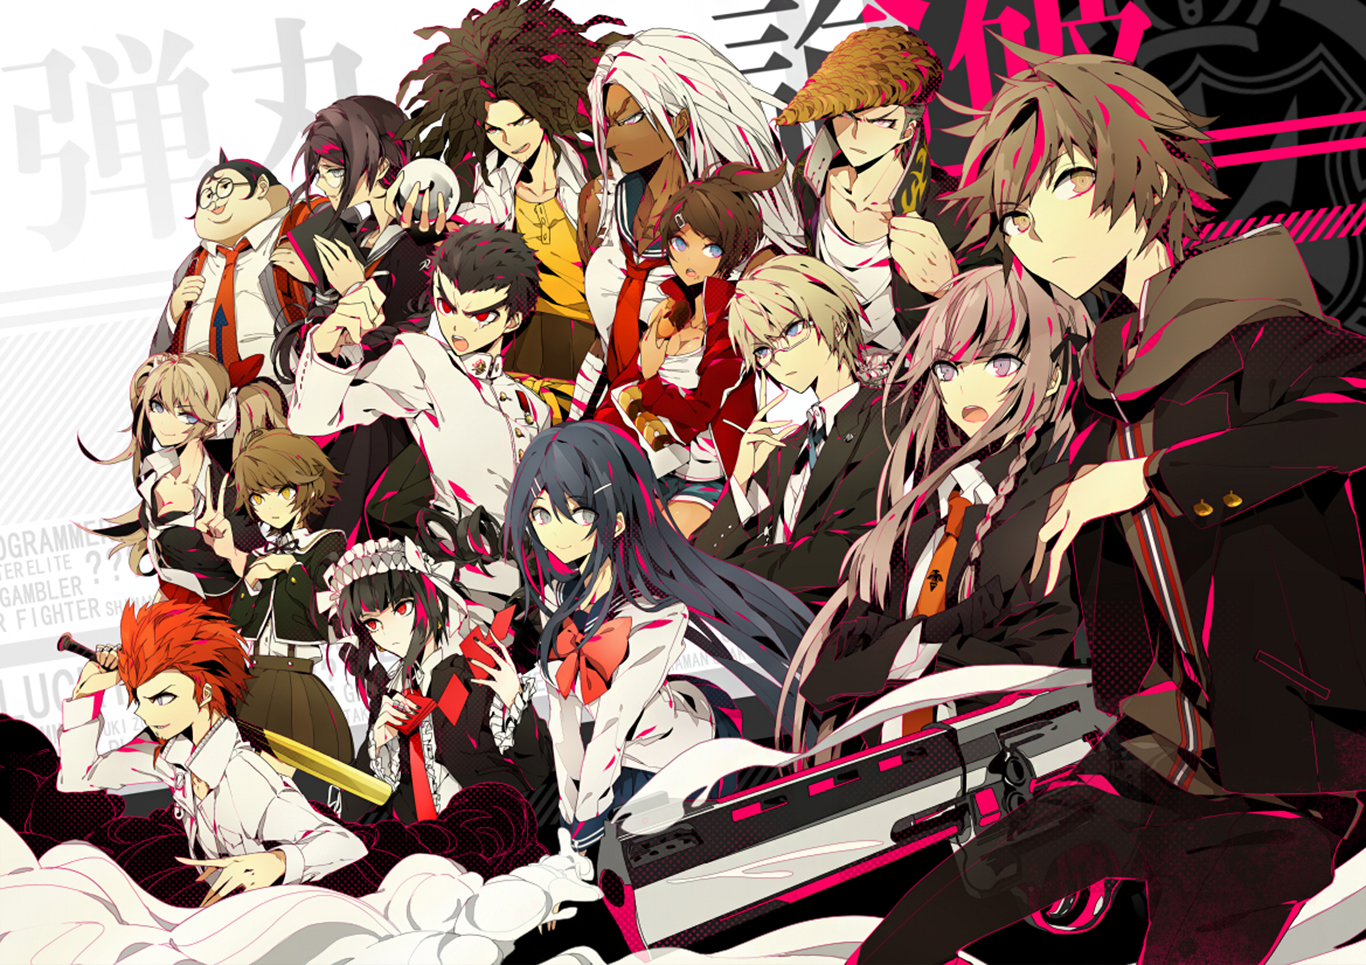 Anime Danganronpa HD Wallpaper | Background Image